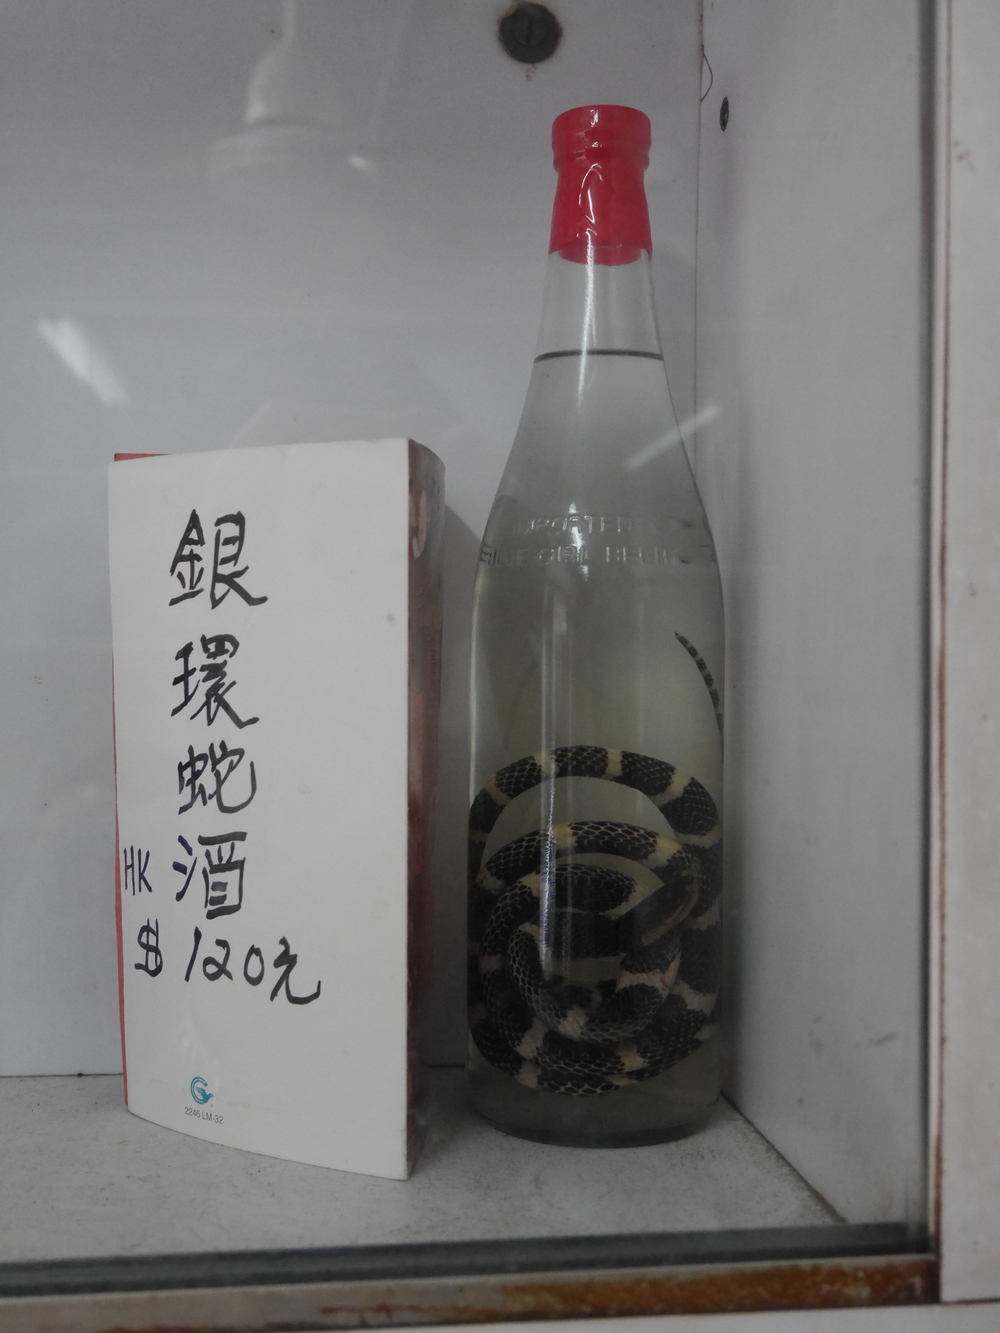  Fancier snake wine with the snake inside. 